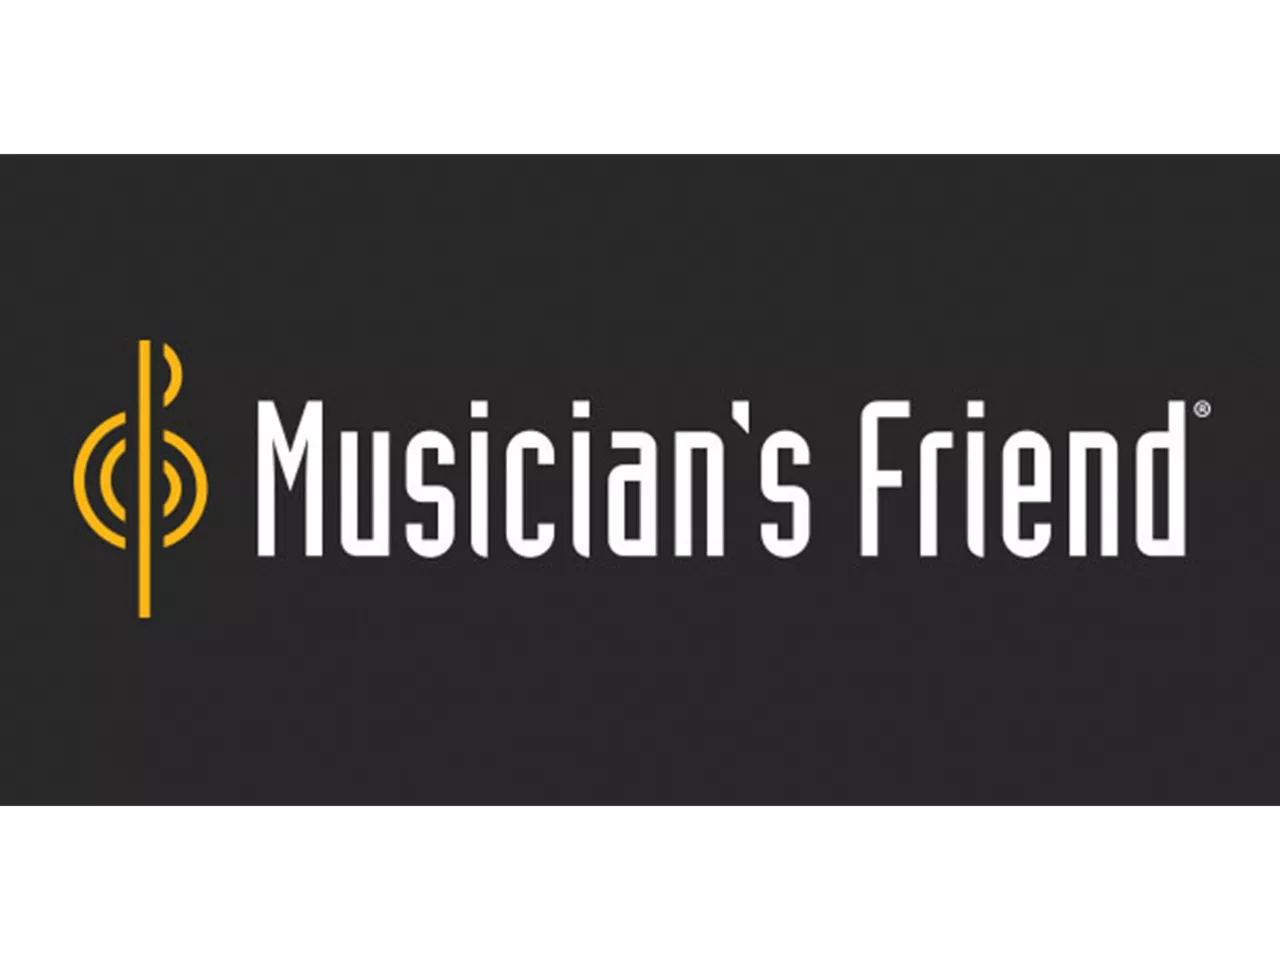 Musicians friend